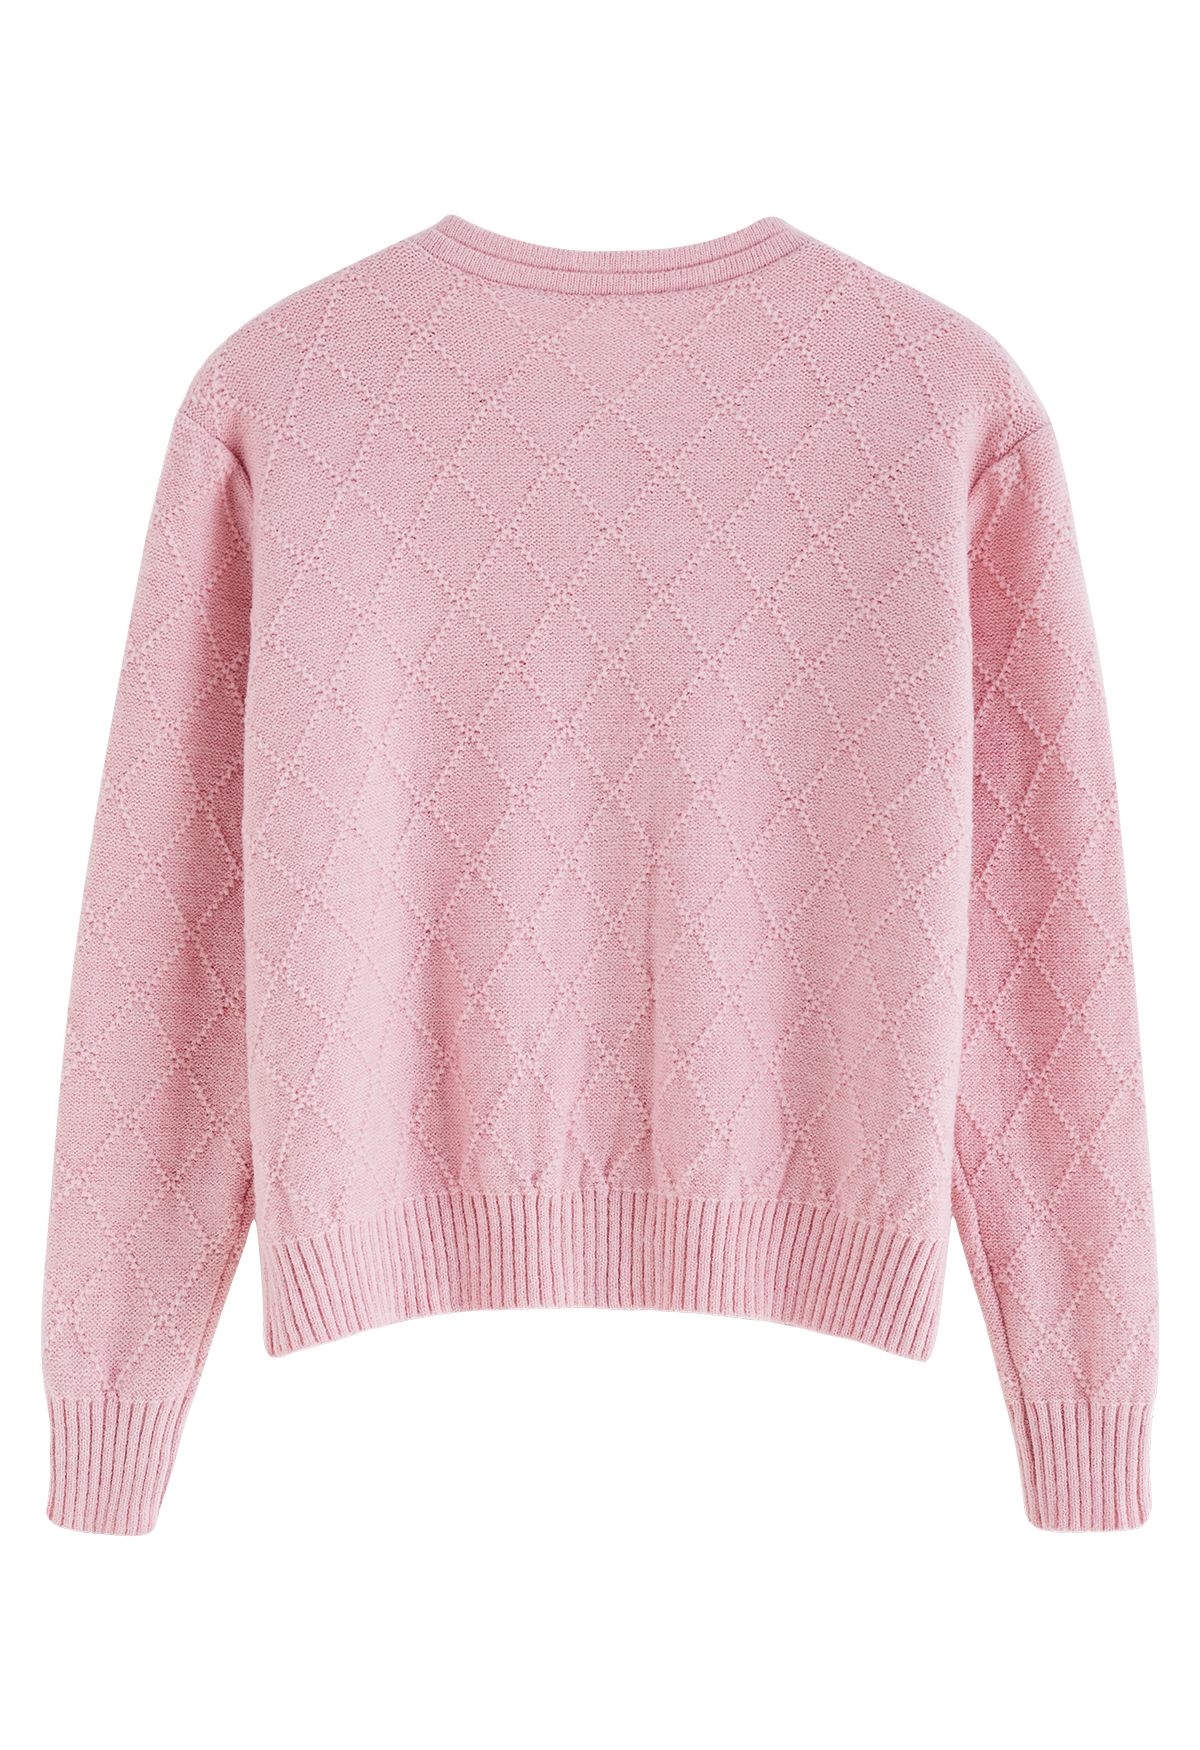 Diamante Studded Pink Knit Cardigan